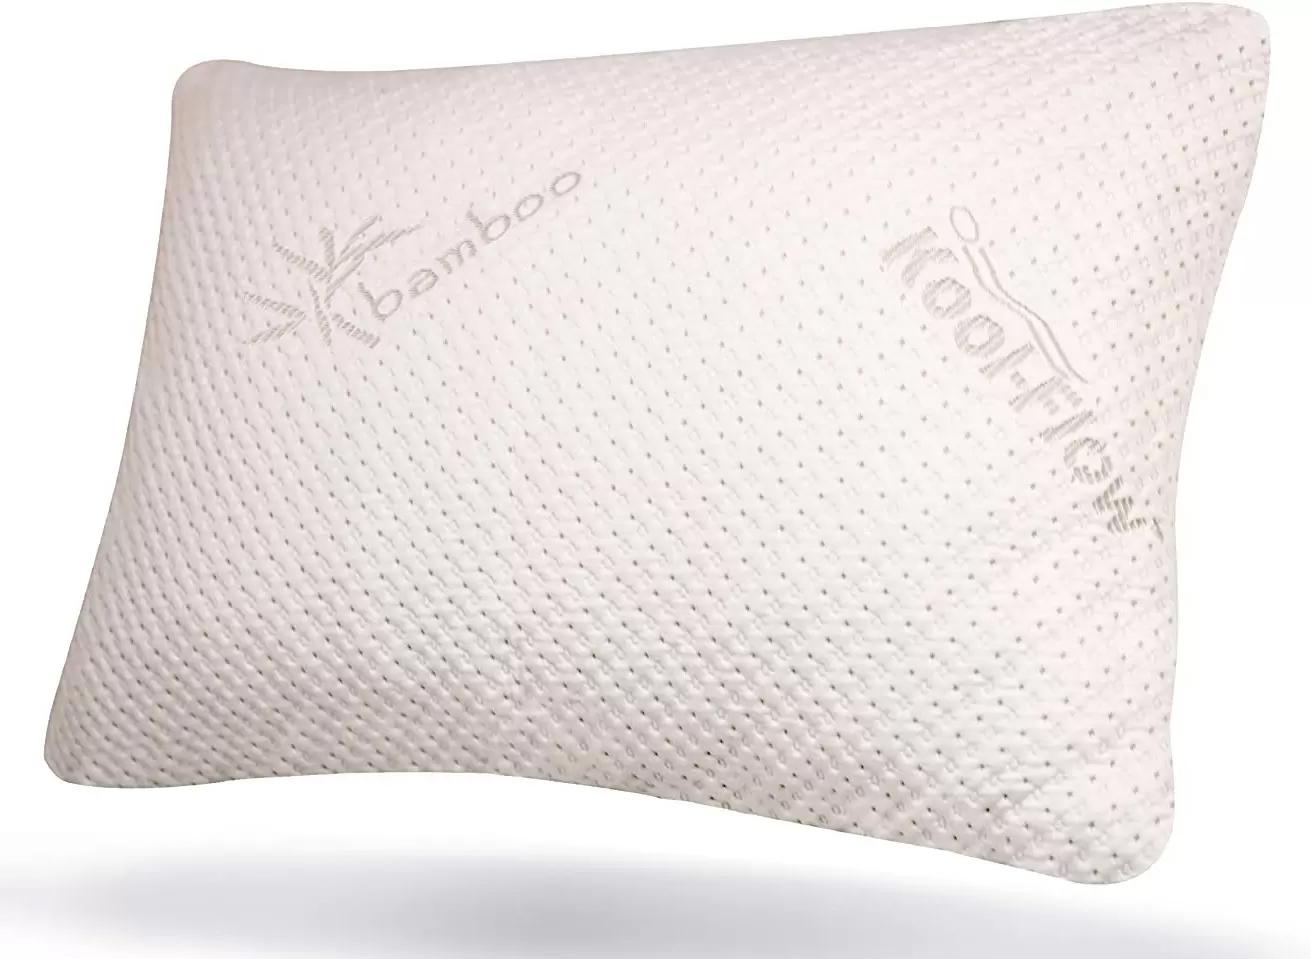 Snuggle Pedic Memory Foam Pillow for $32.99 Shipped